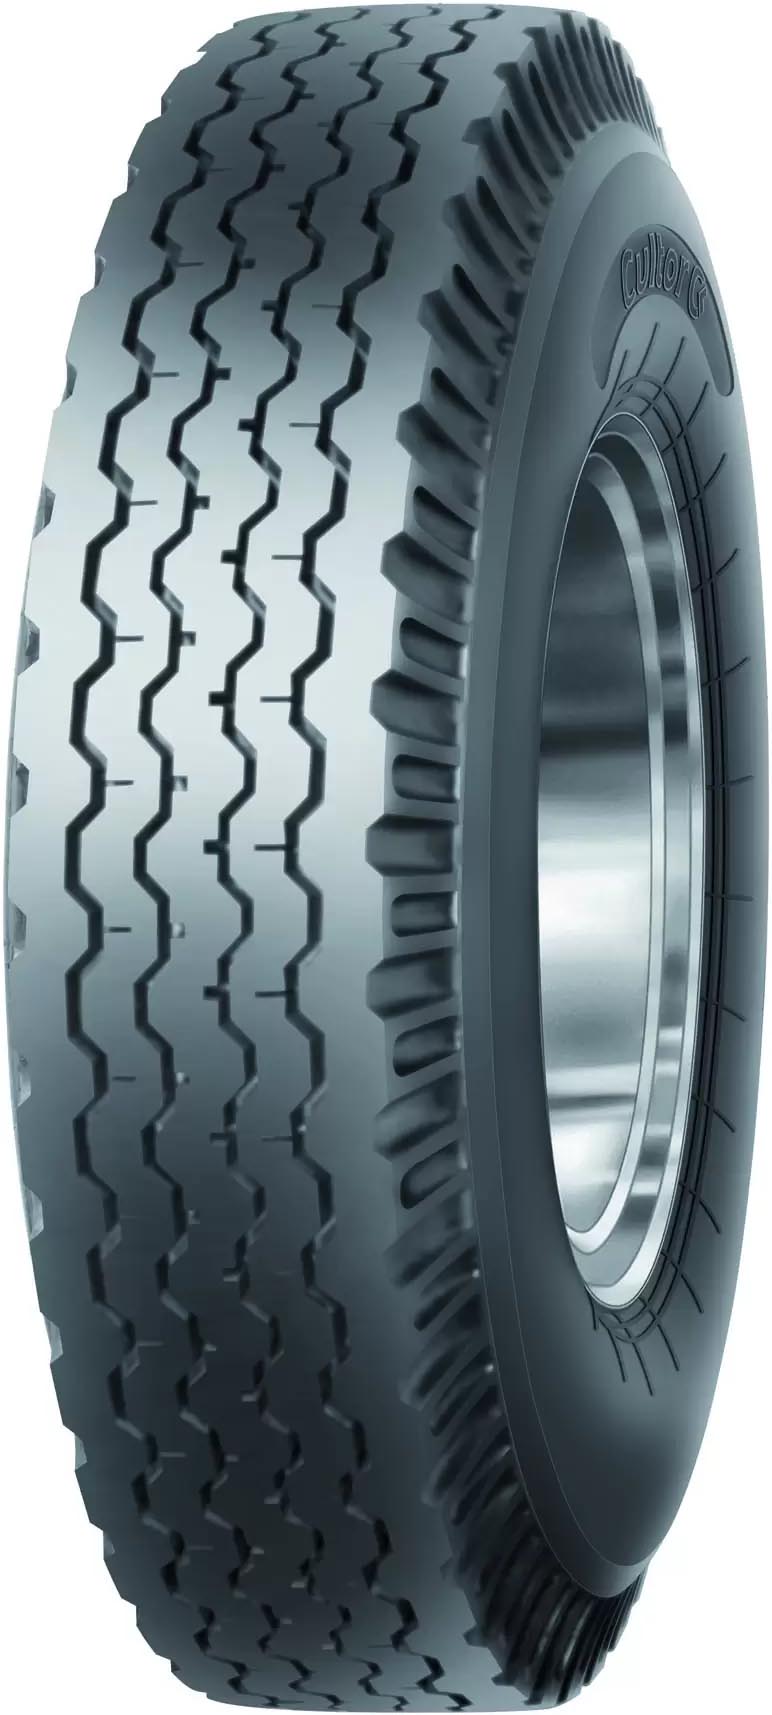 product_type-industrial_tires CULTOR AW-Impl 12 16PR TT 8.25 R15 P